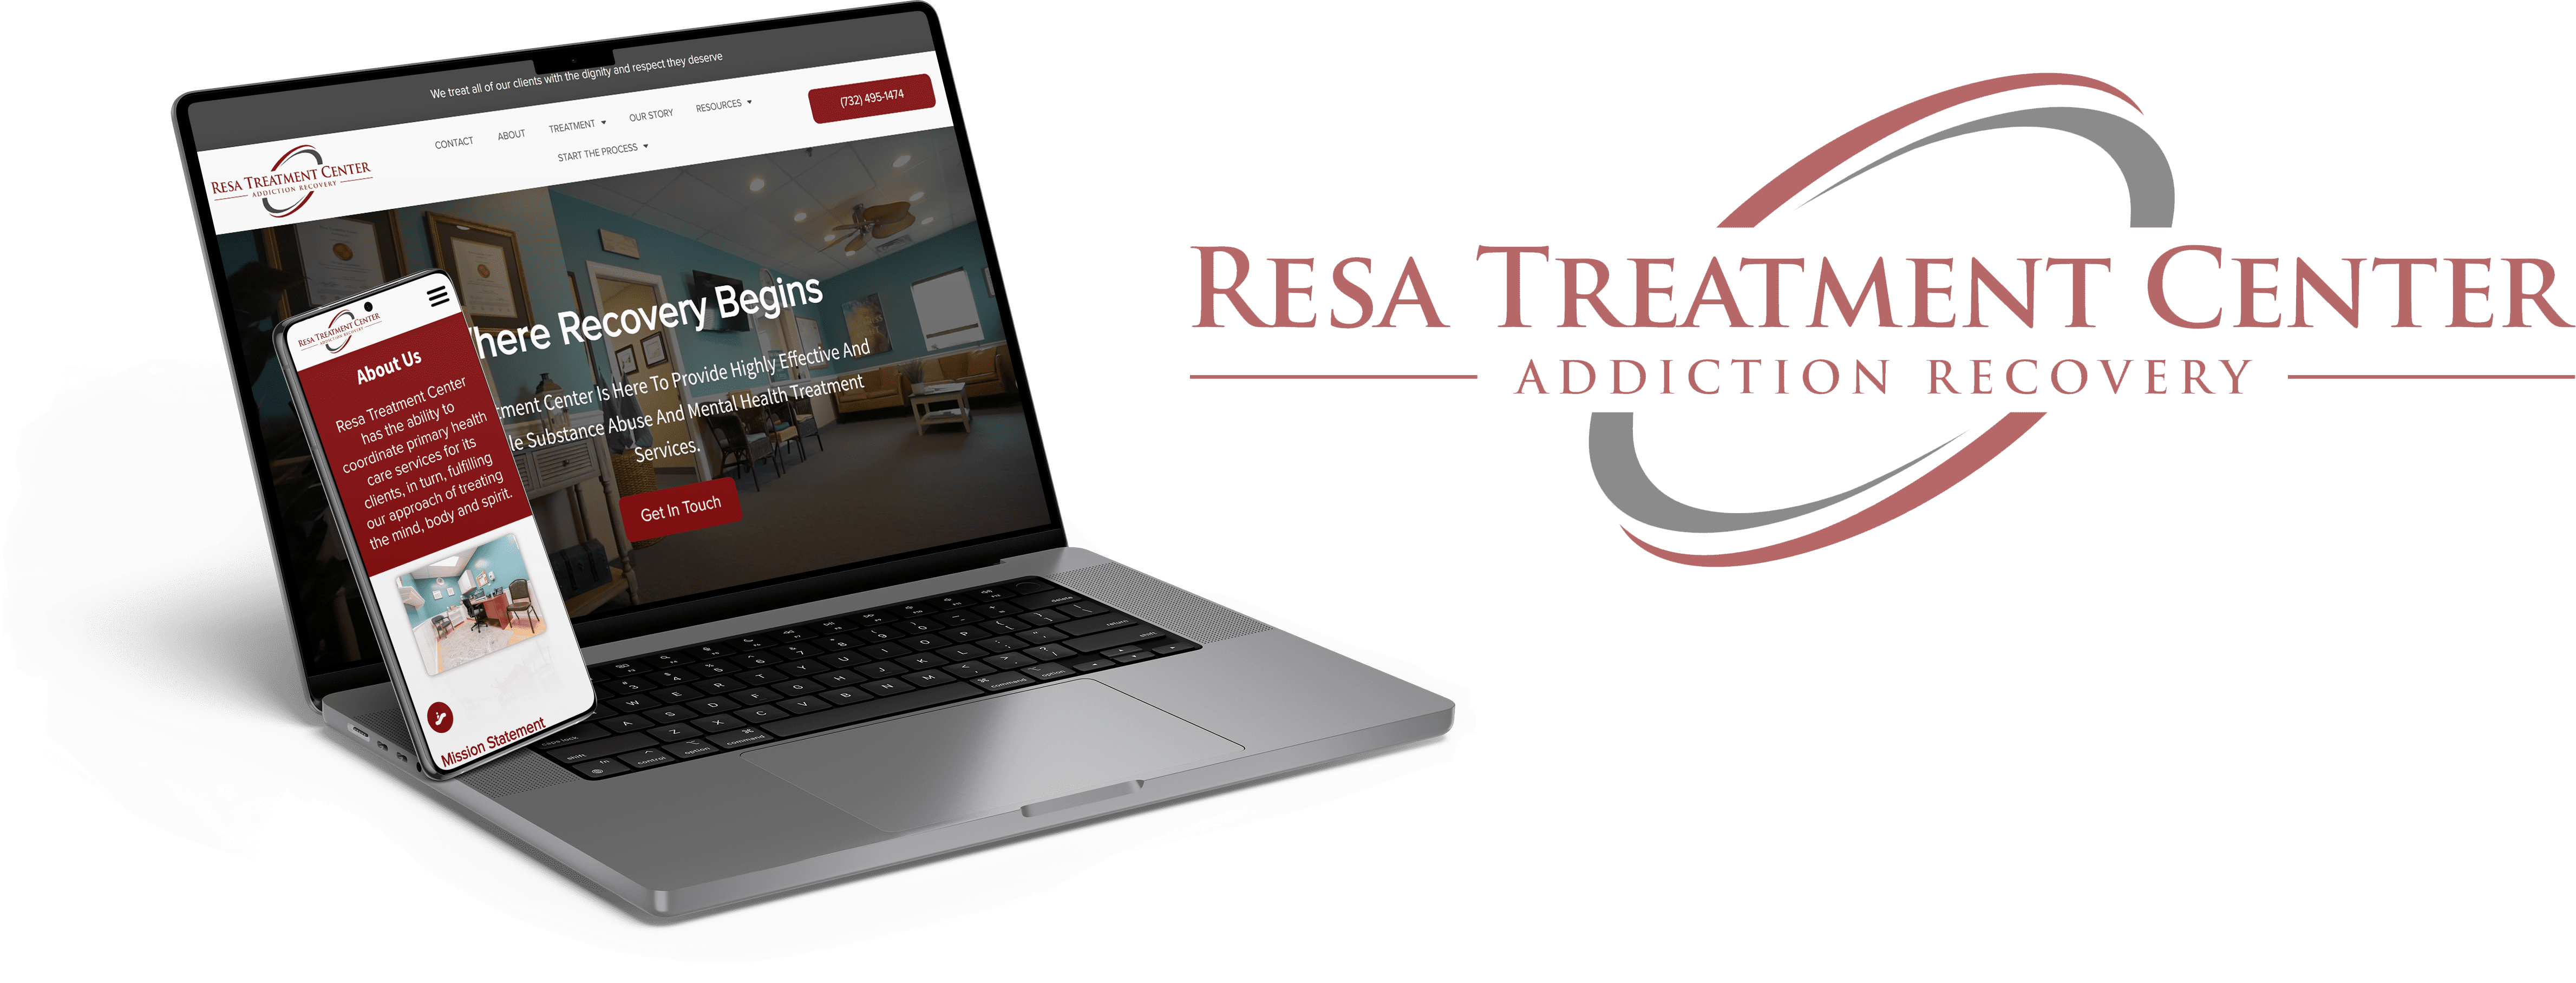 Resa Treatment Center